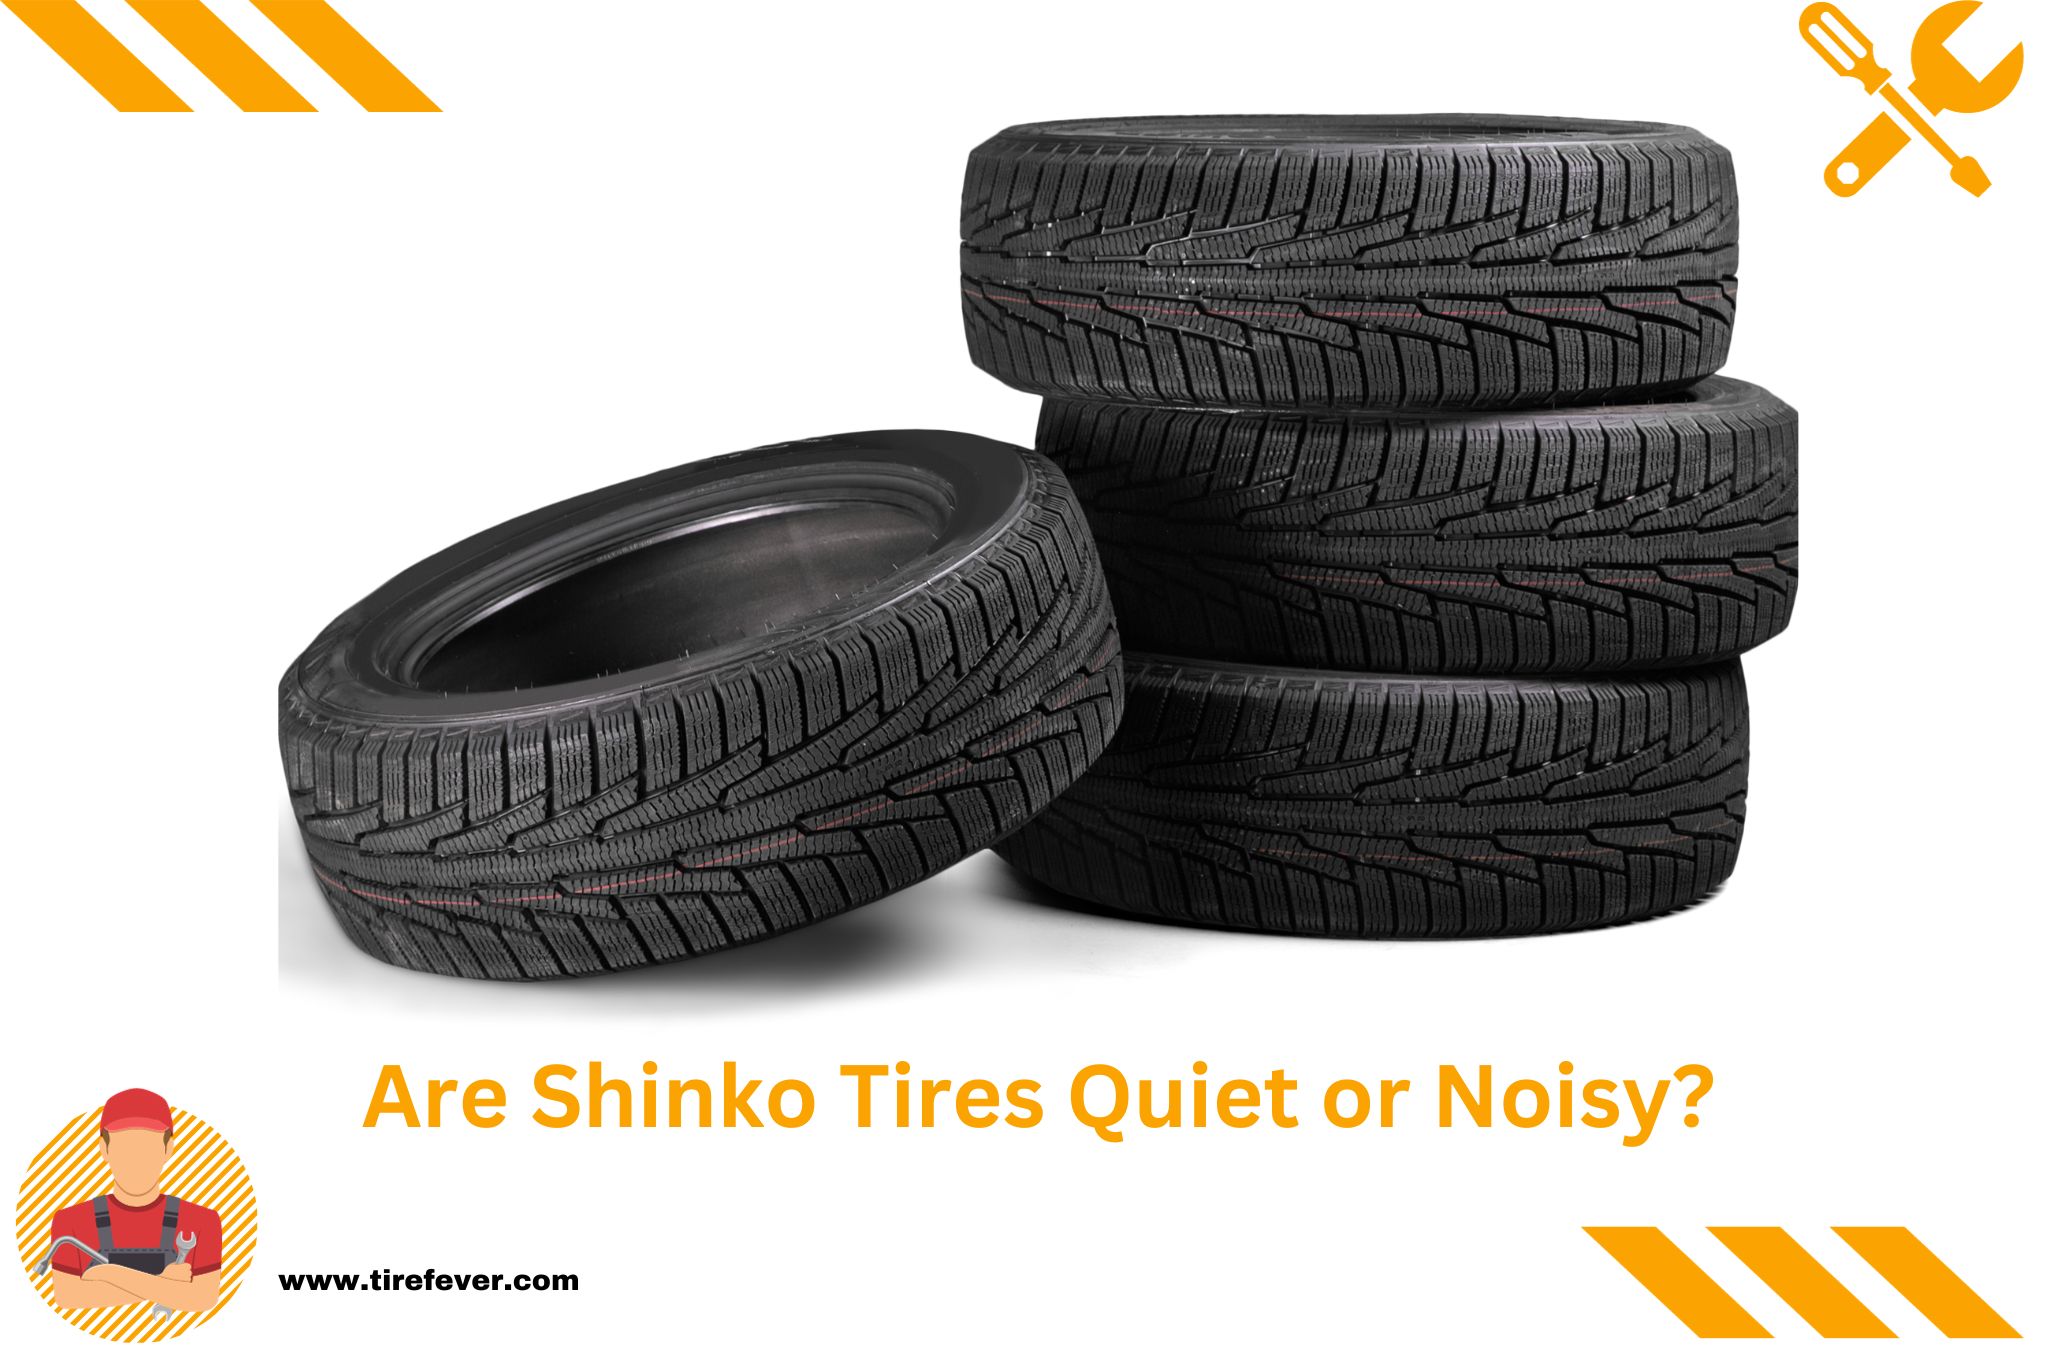 Are Shinko Tires Quiet or Noisy?